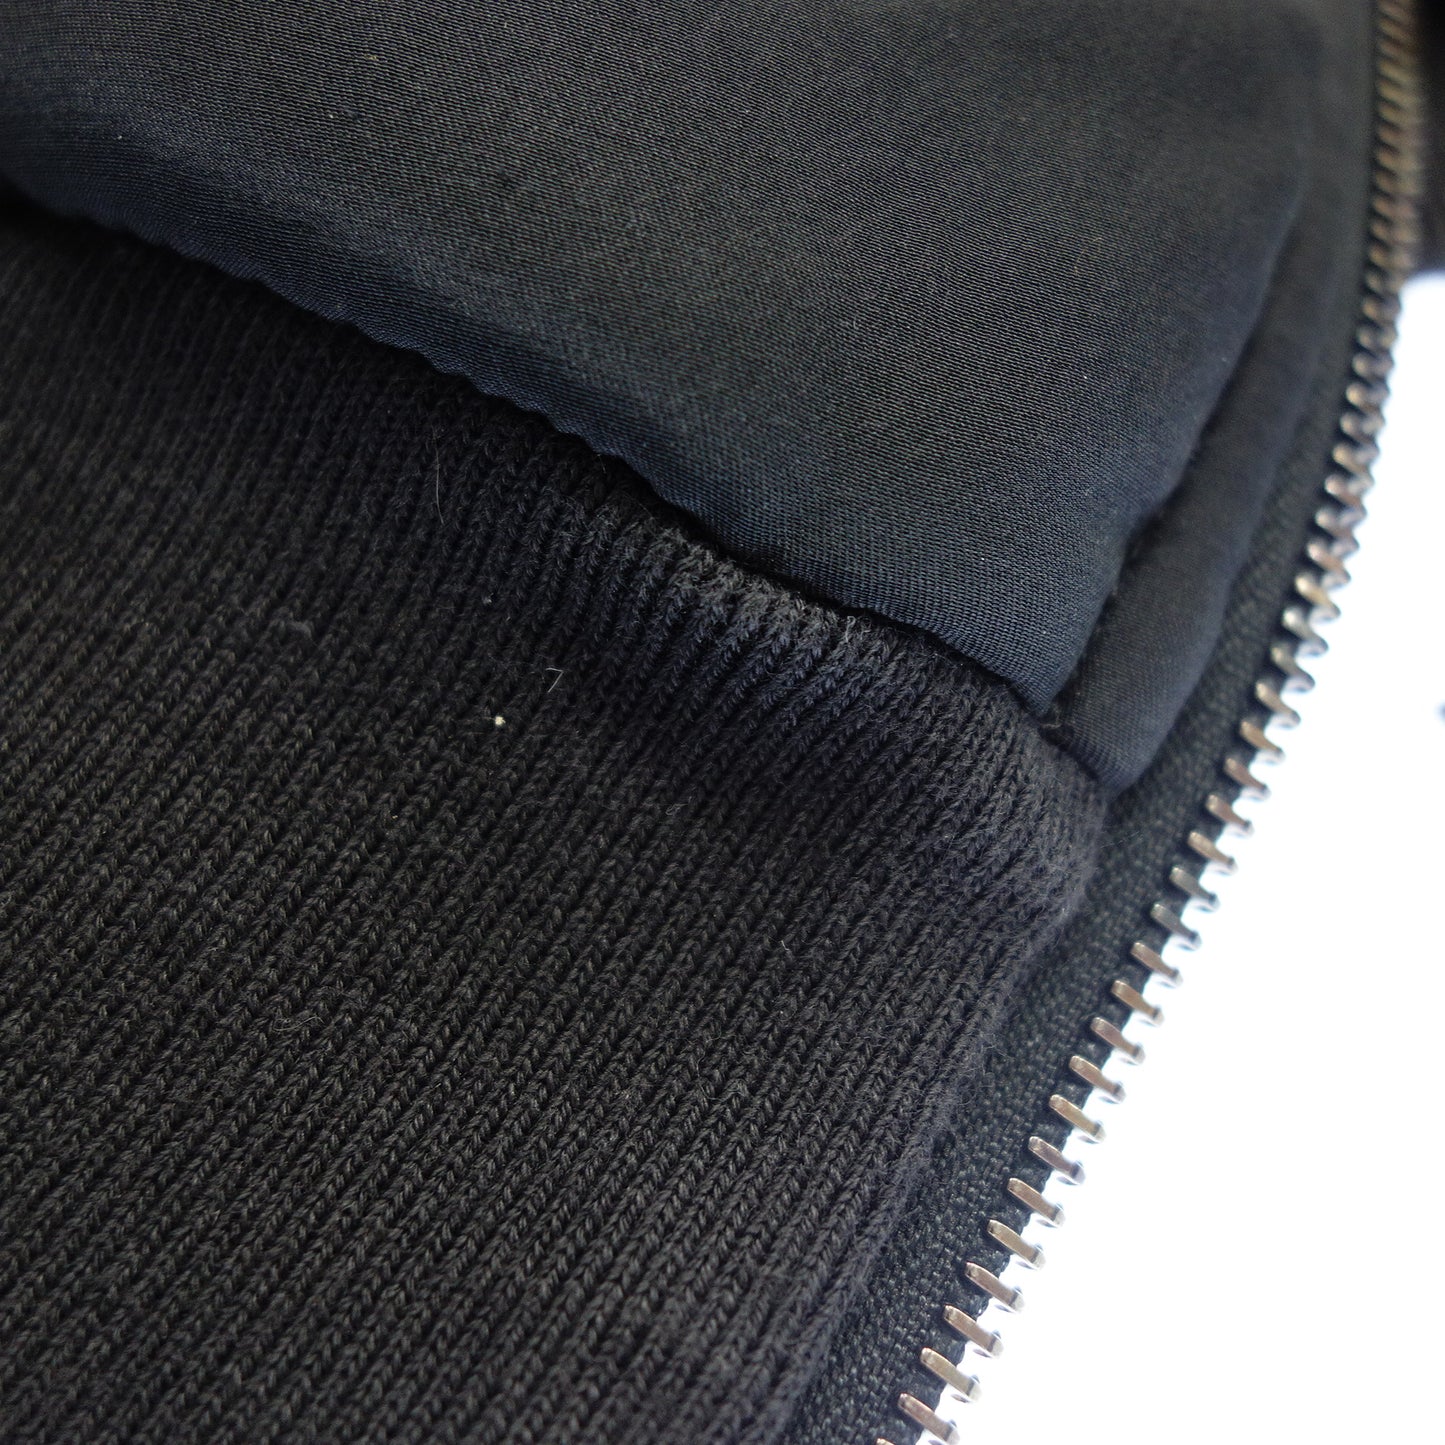 Used Dolce &amp; Gabbana Zip Up Parka Men's Cotton Silk Black Size 48 DOLCE&amp;GABBANA [AFB12] 